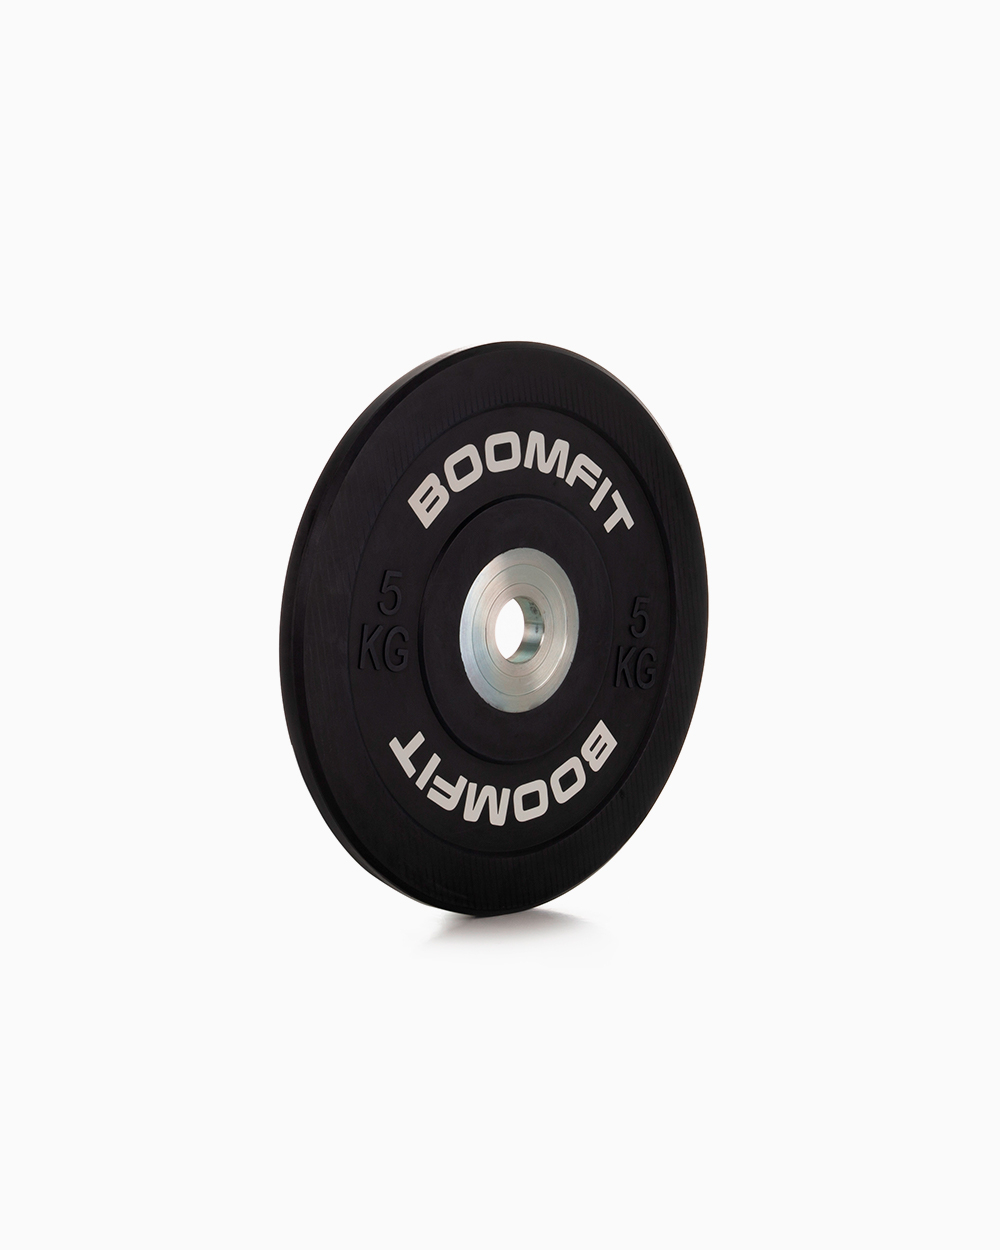 Disco De Competición Boomfit 5kg - negro - 